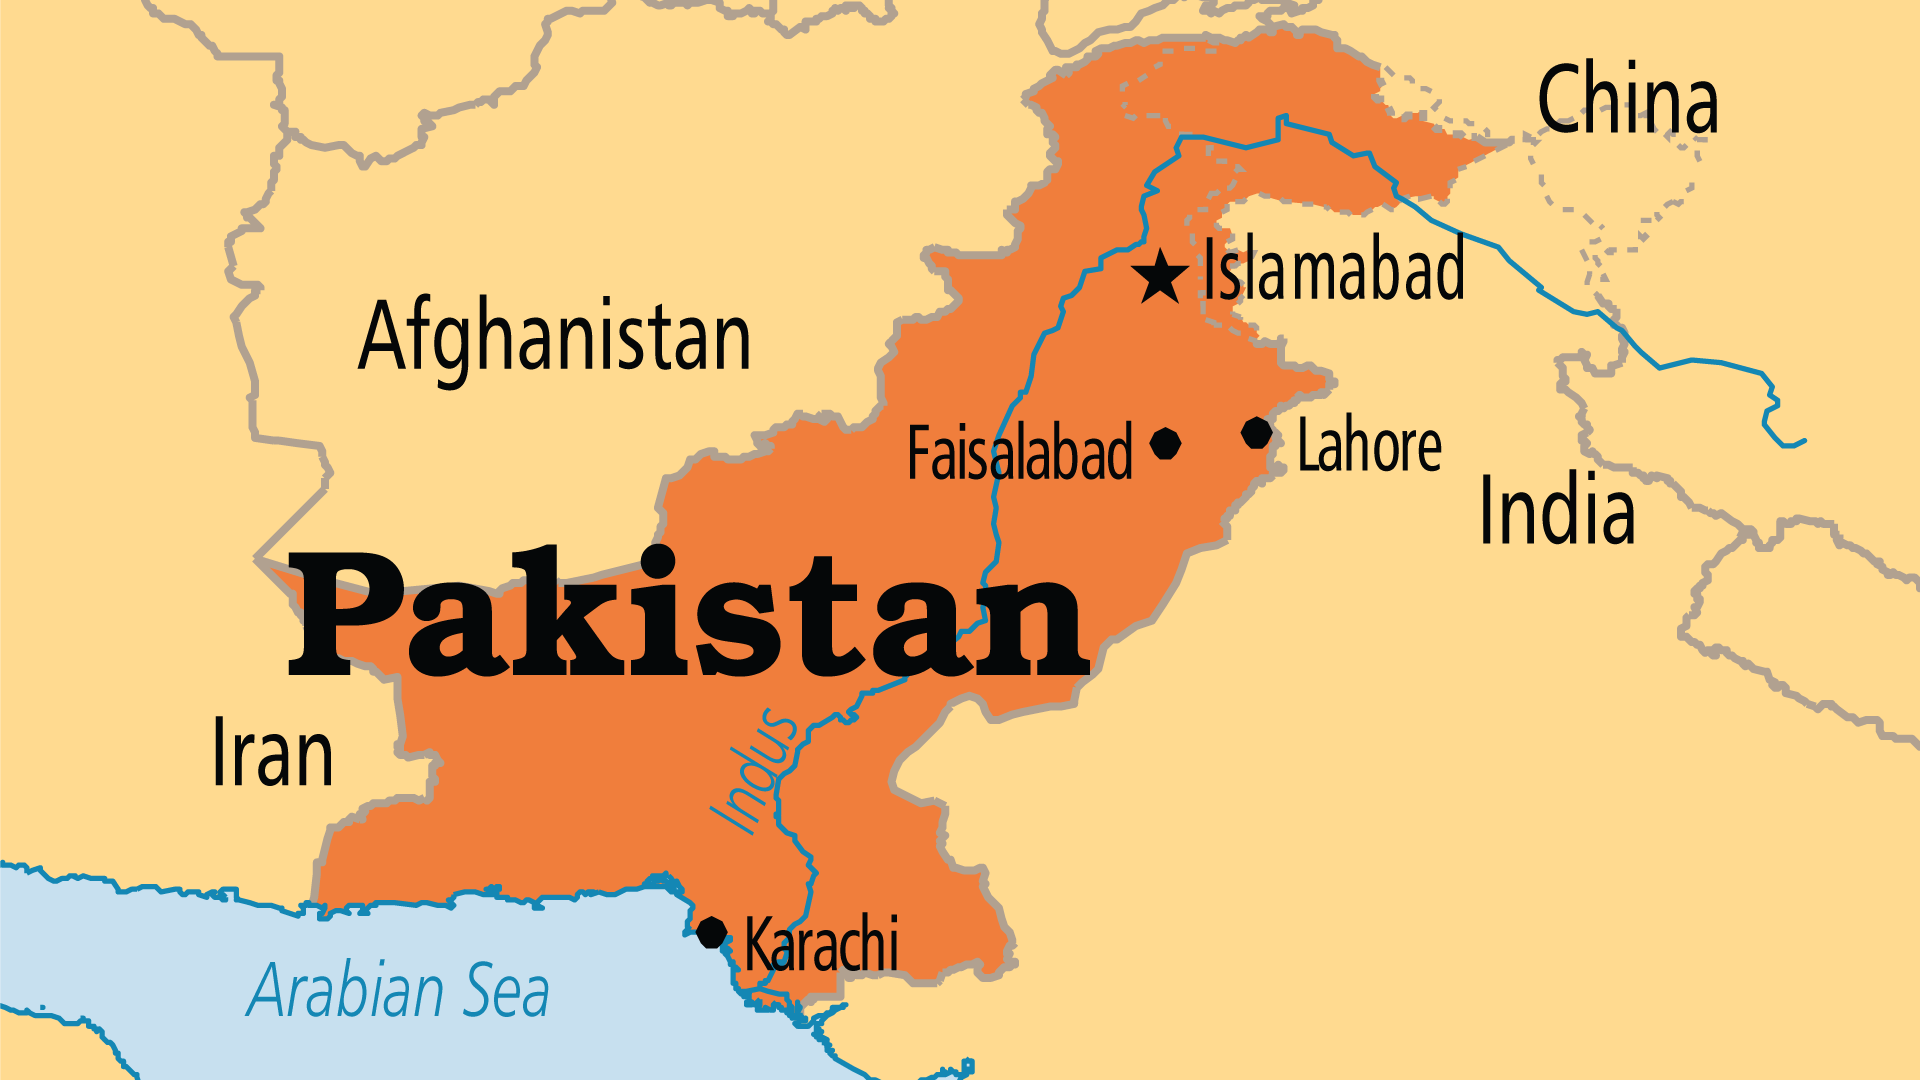 Pakistan (Operation World)